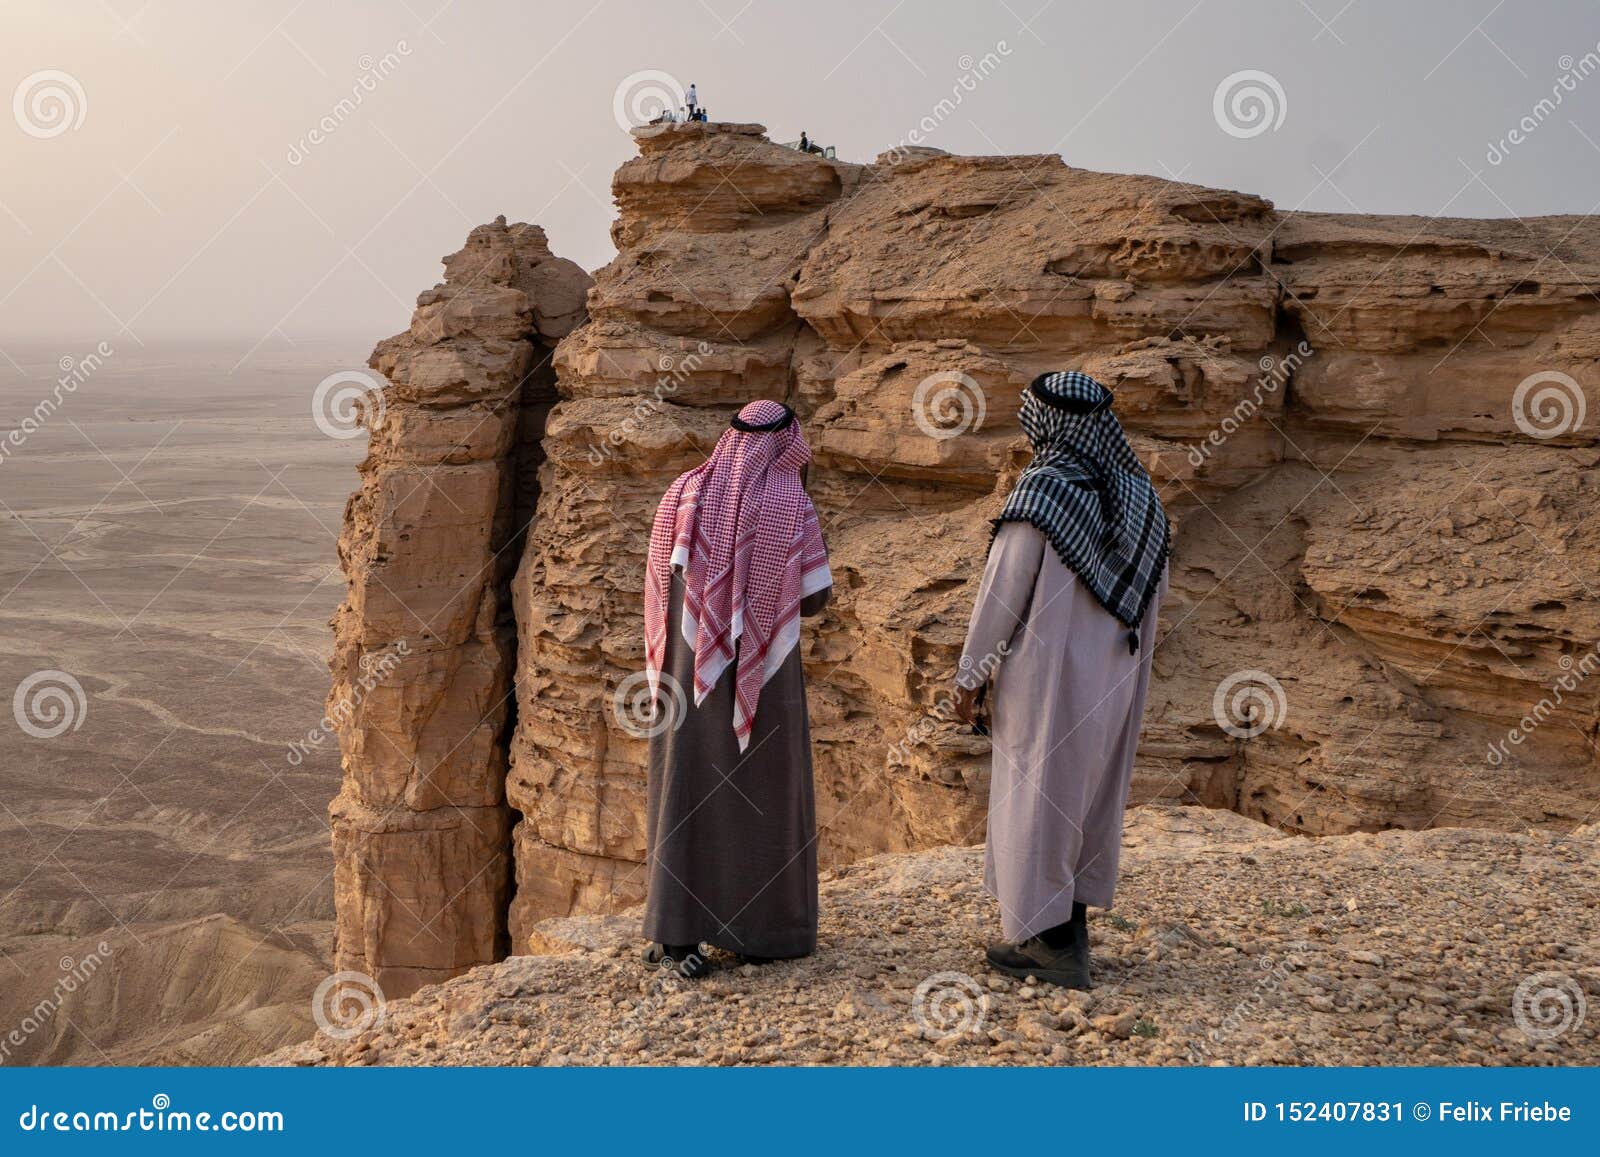 two arab men in traditional clothing at the edge of the world near riyadh in saudi arabia